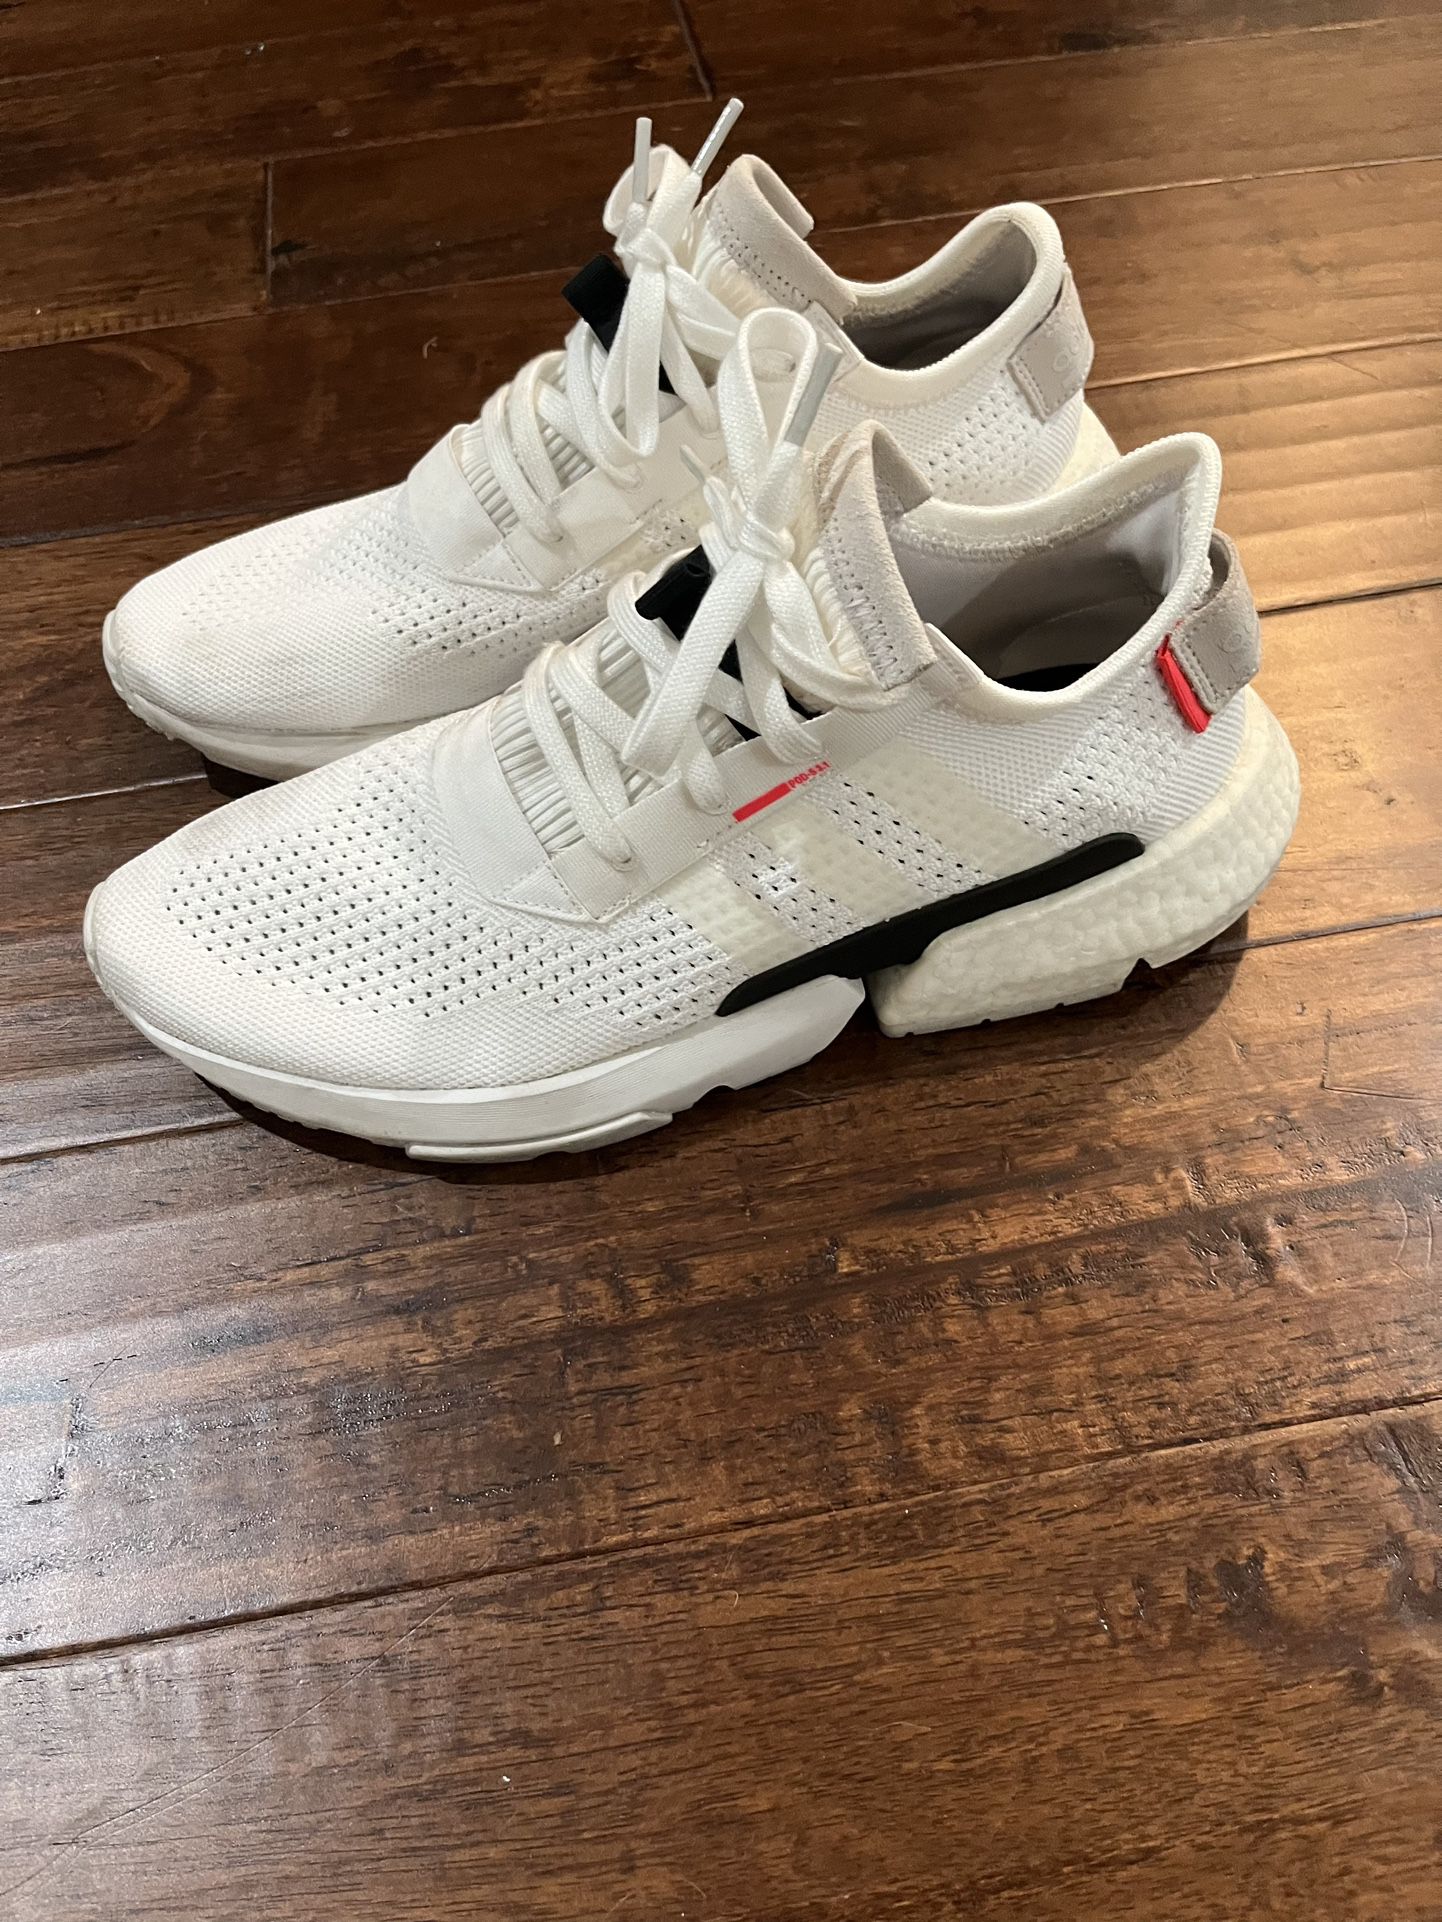 Men’s Adidas POD S3.1 Sneaker Size 11.5 